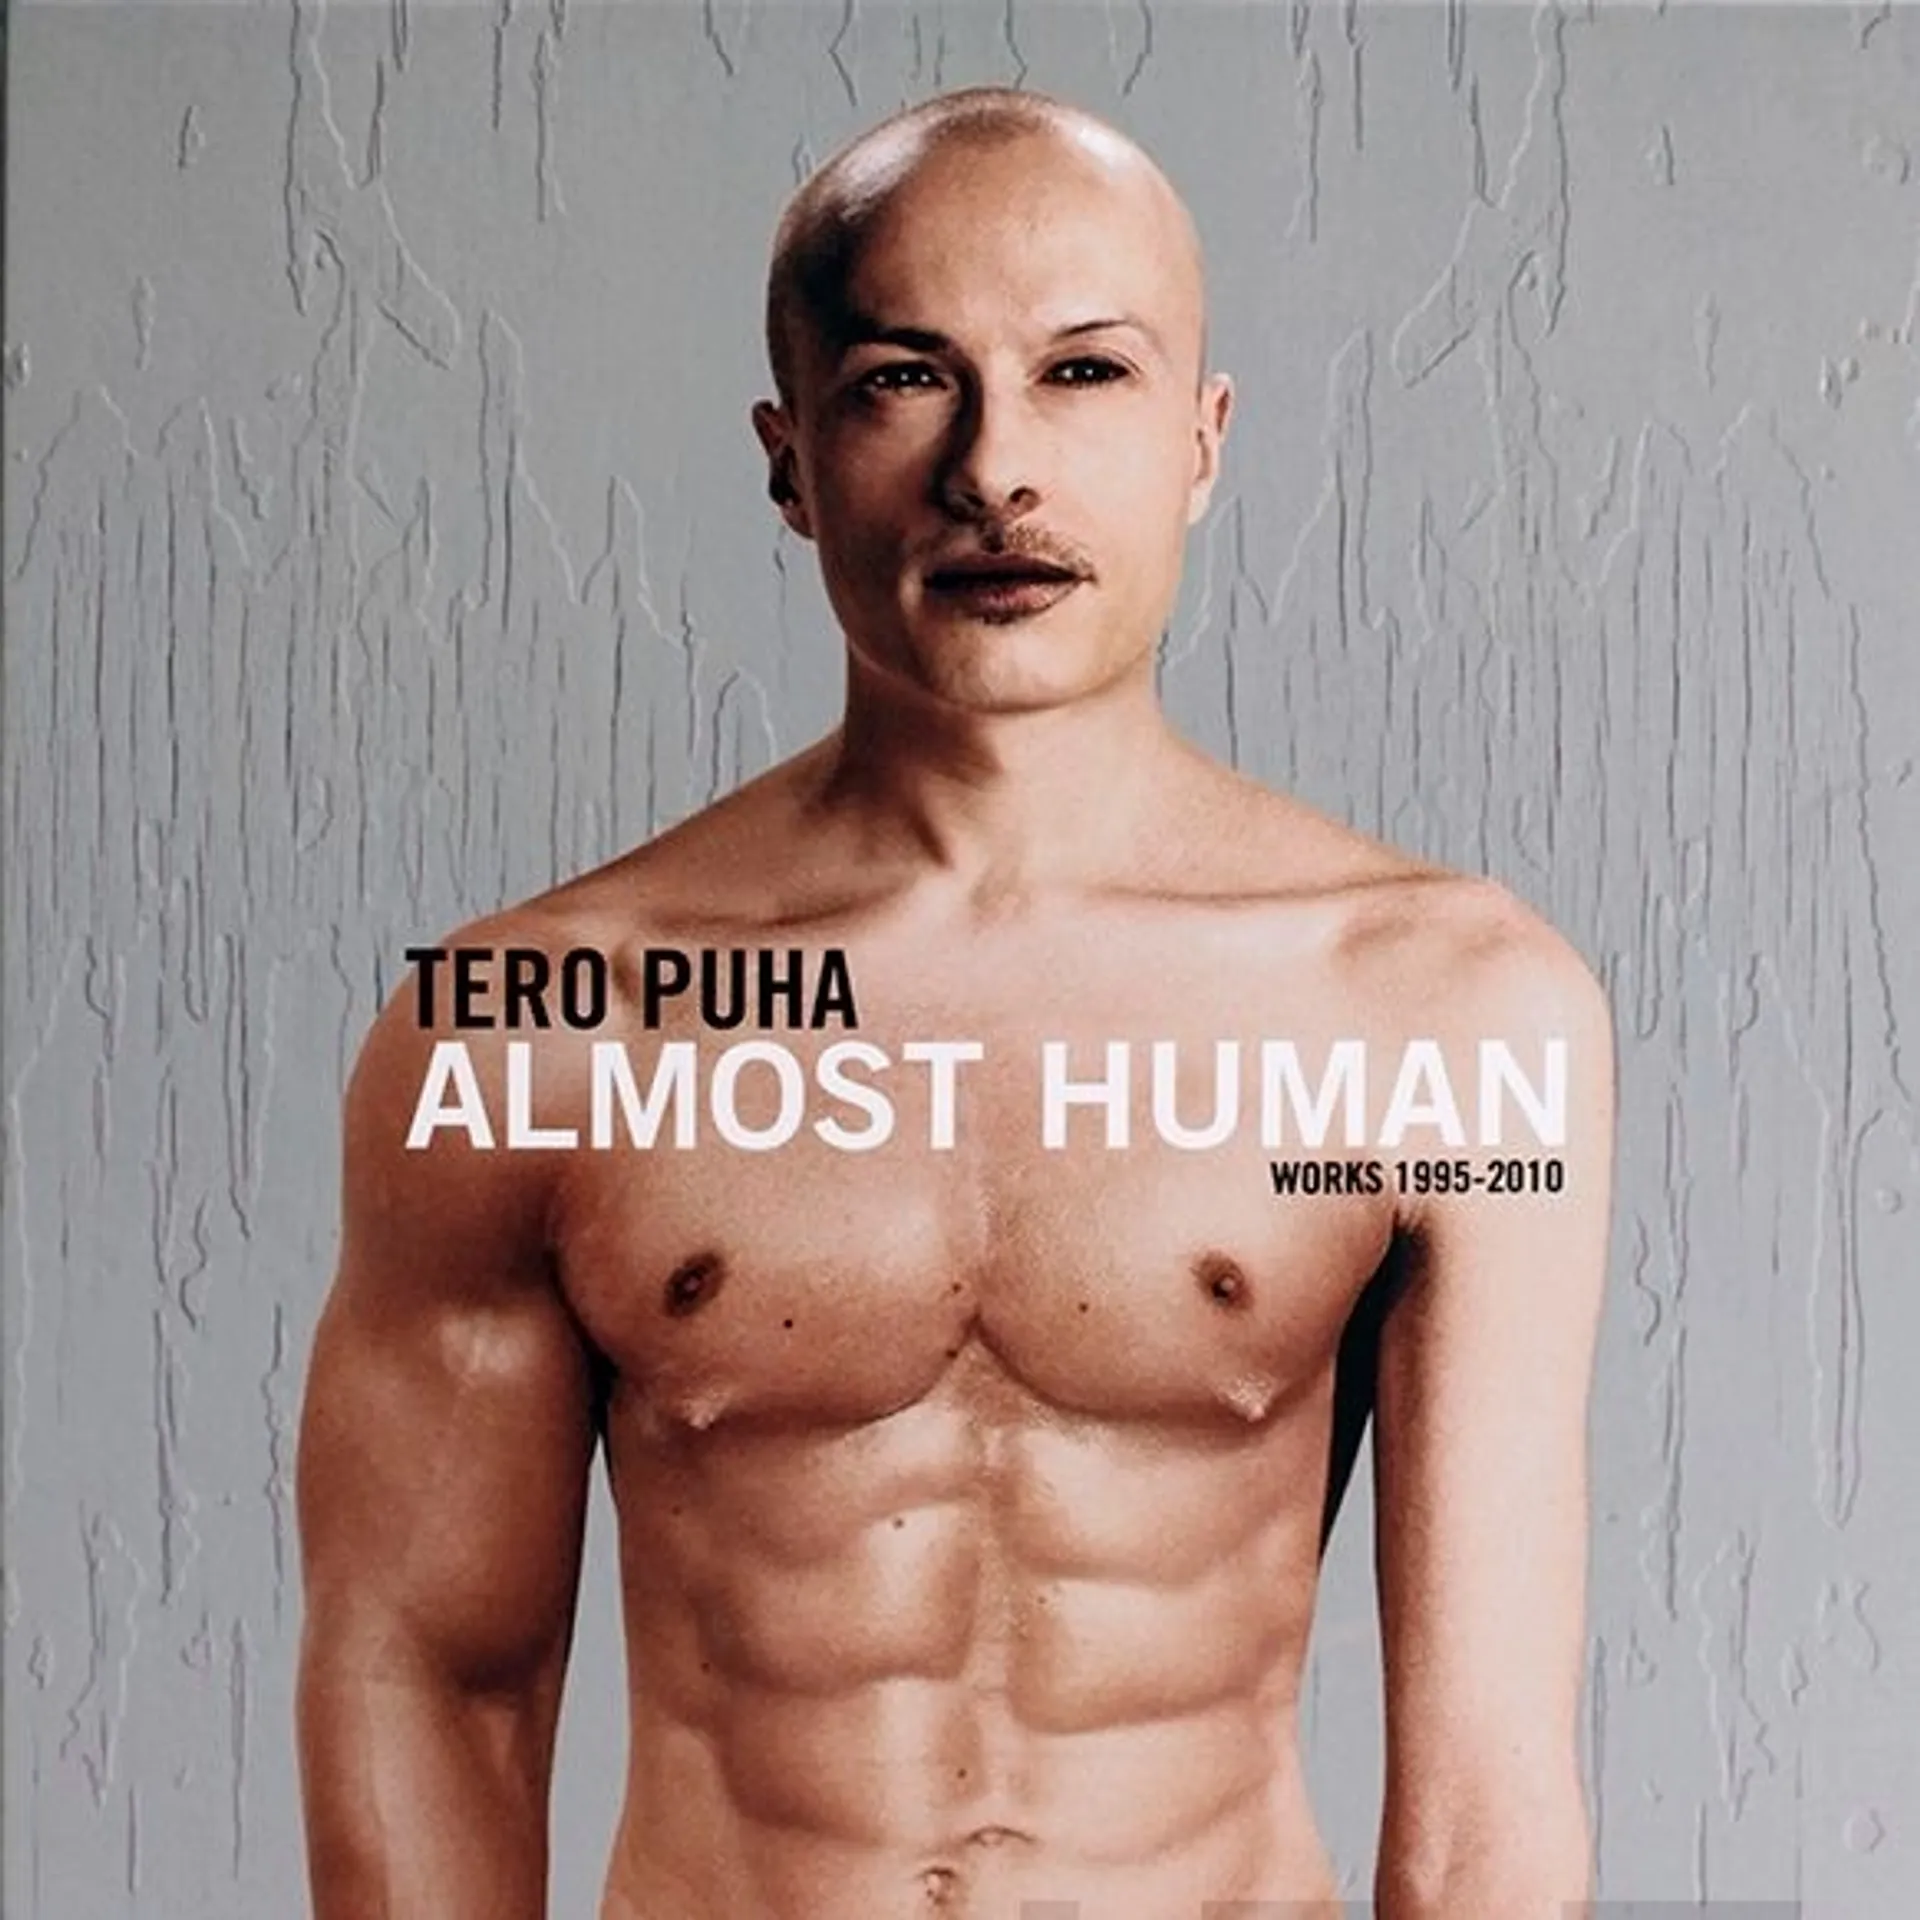 Puha, Almost Human - works 1995-2010